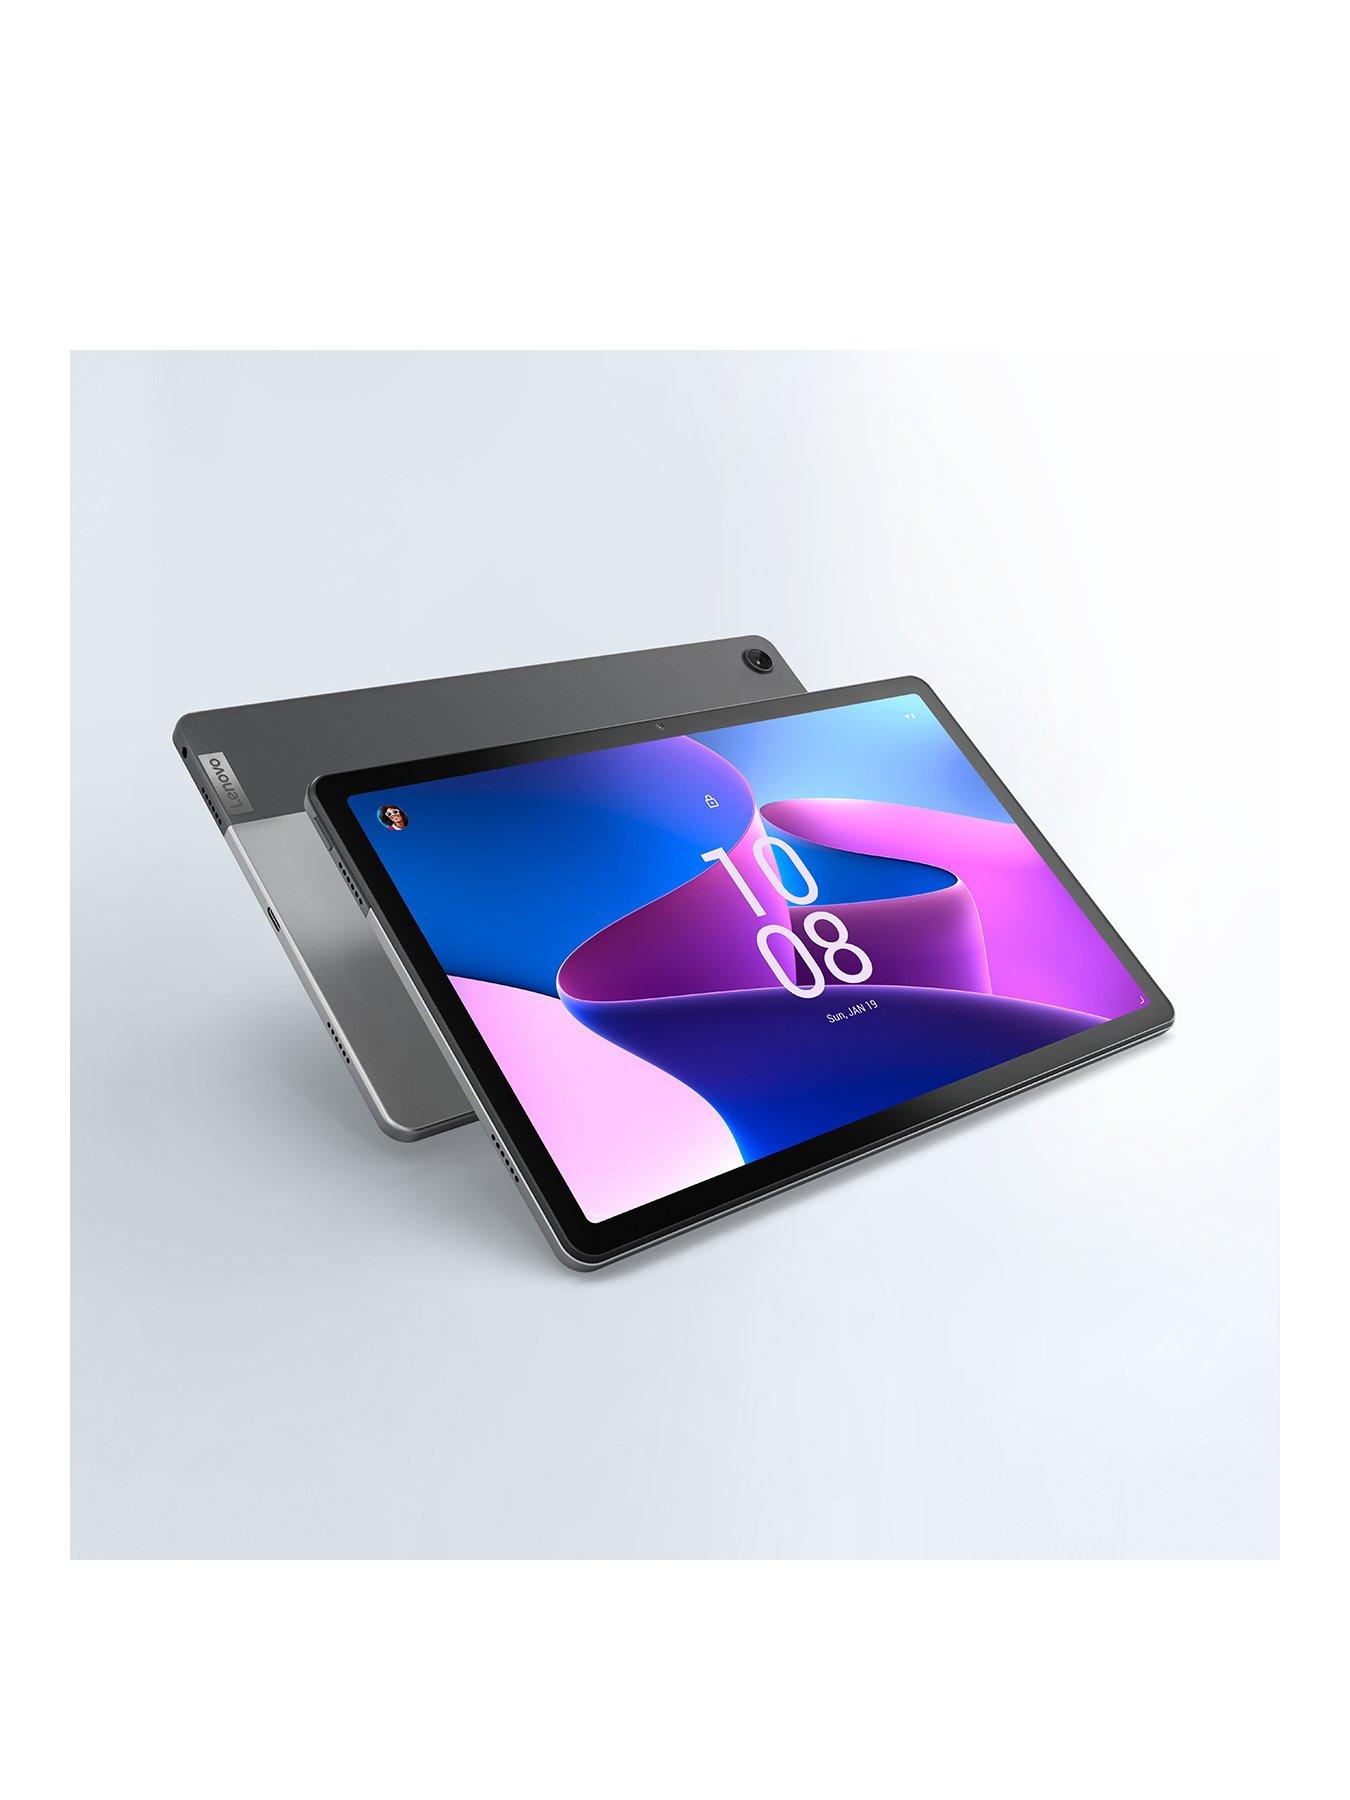 M10 Plus 3rd Gen 10.61-inch Tablet - 4GB RAM, 128GB Storage